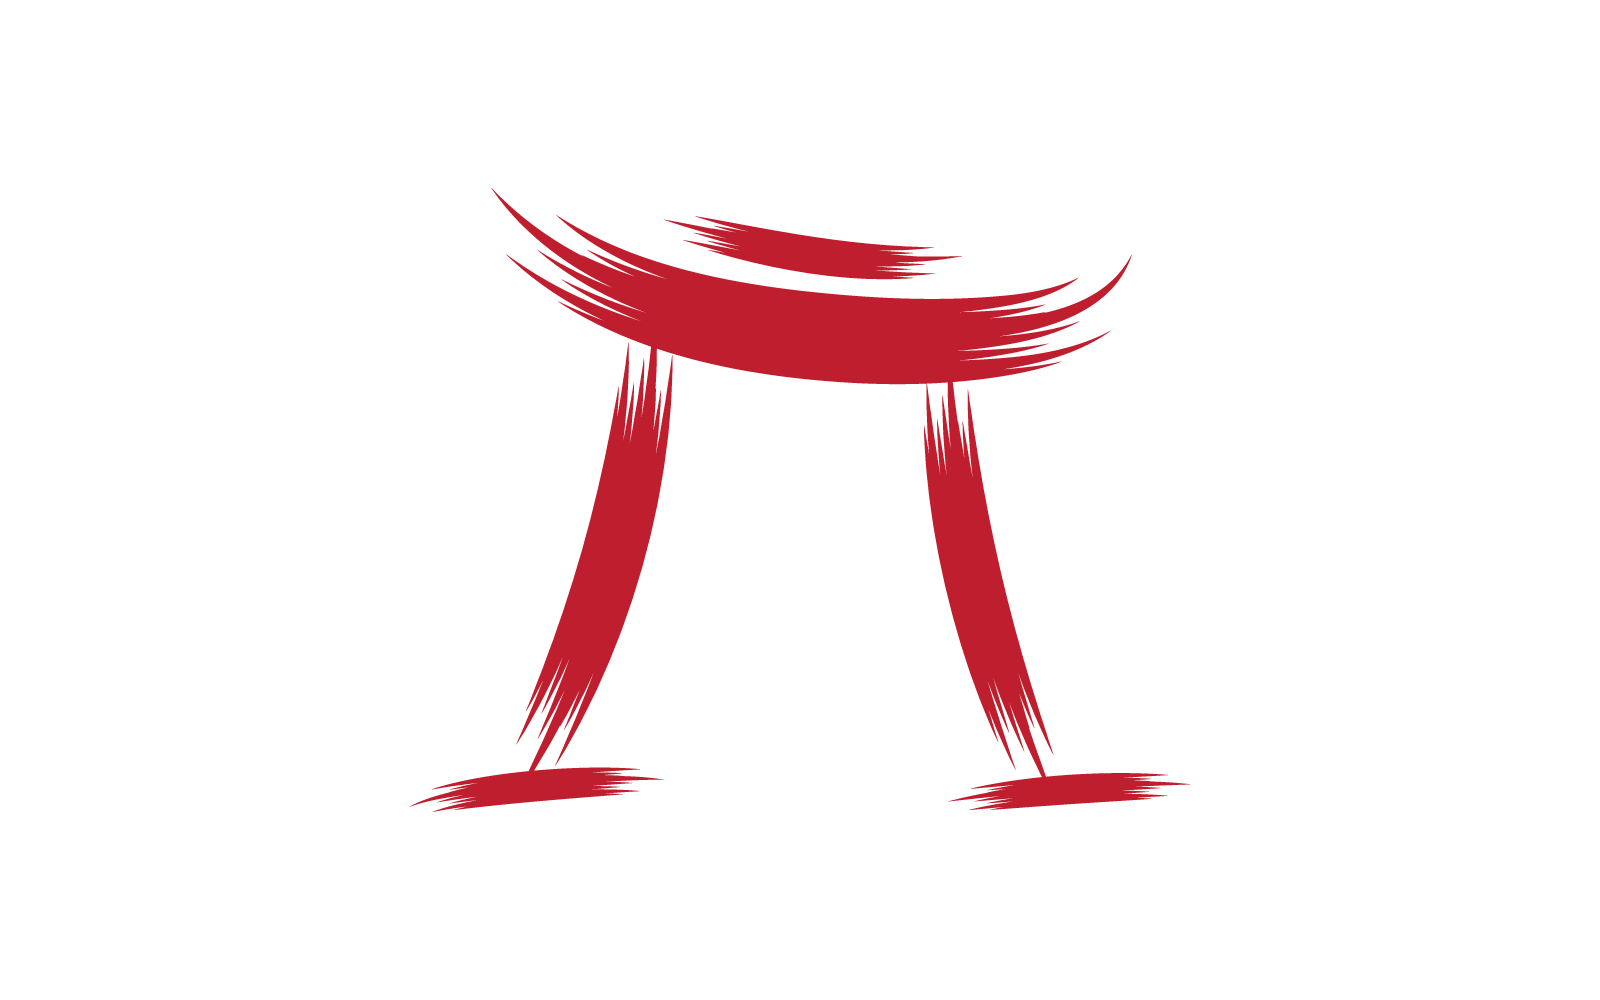 Torii gate logo vector flat design